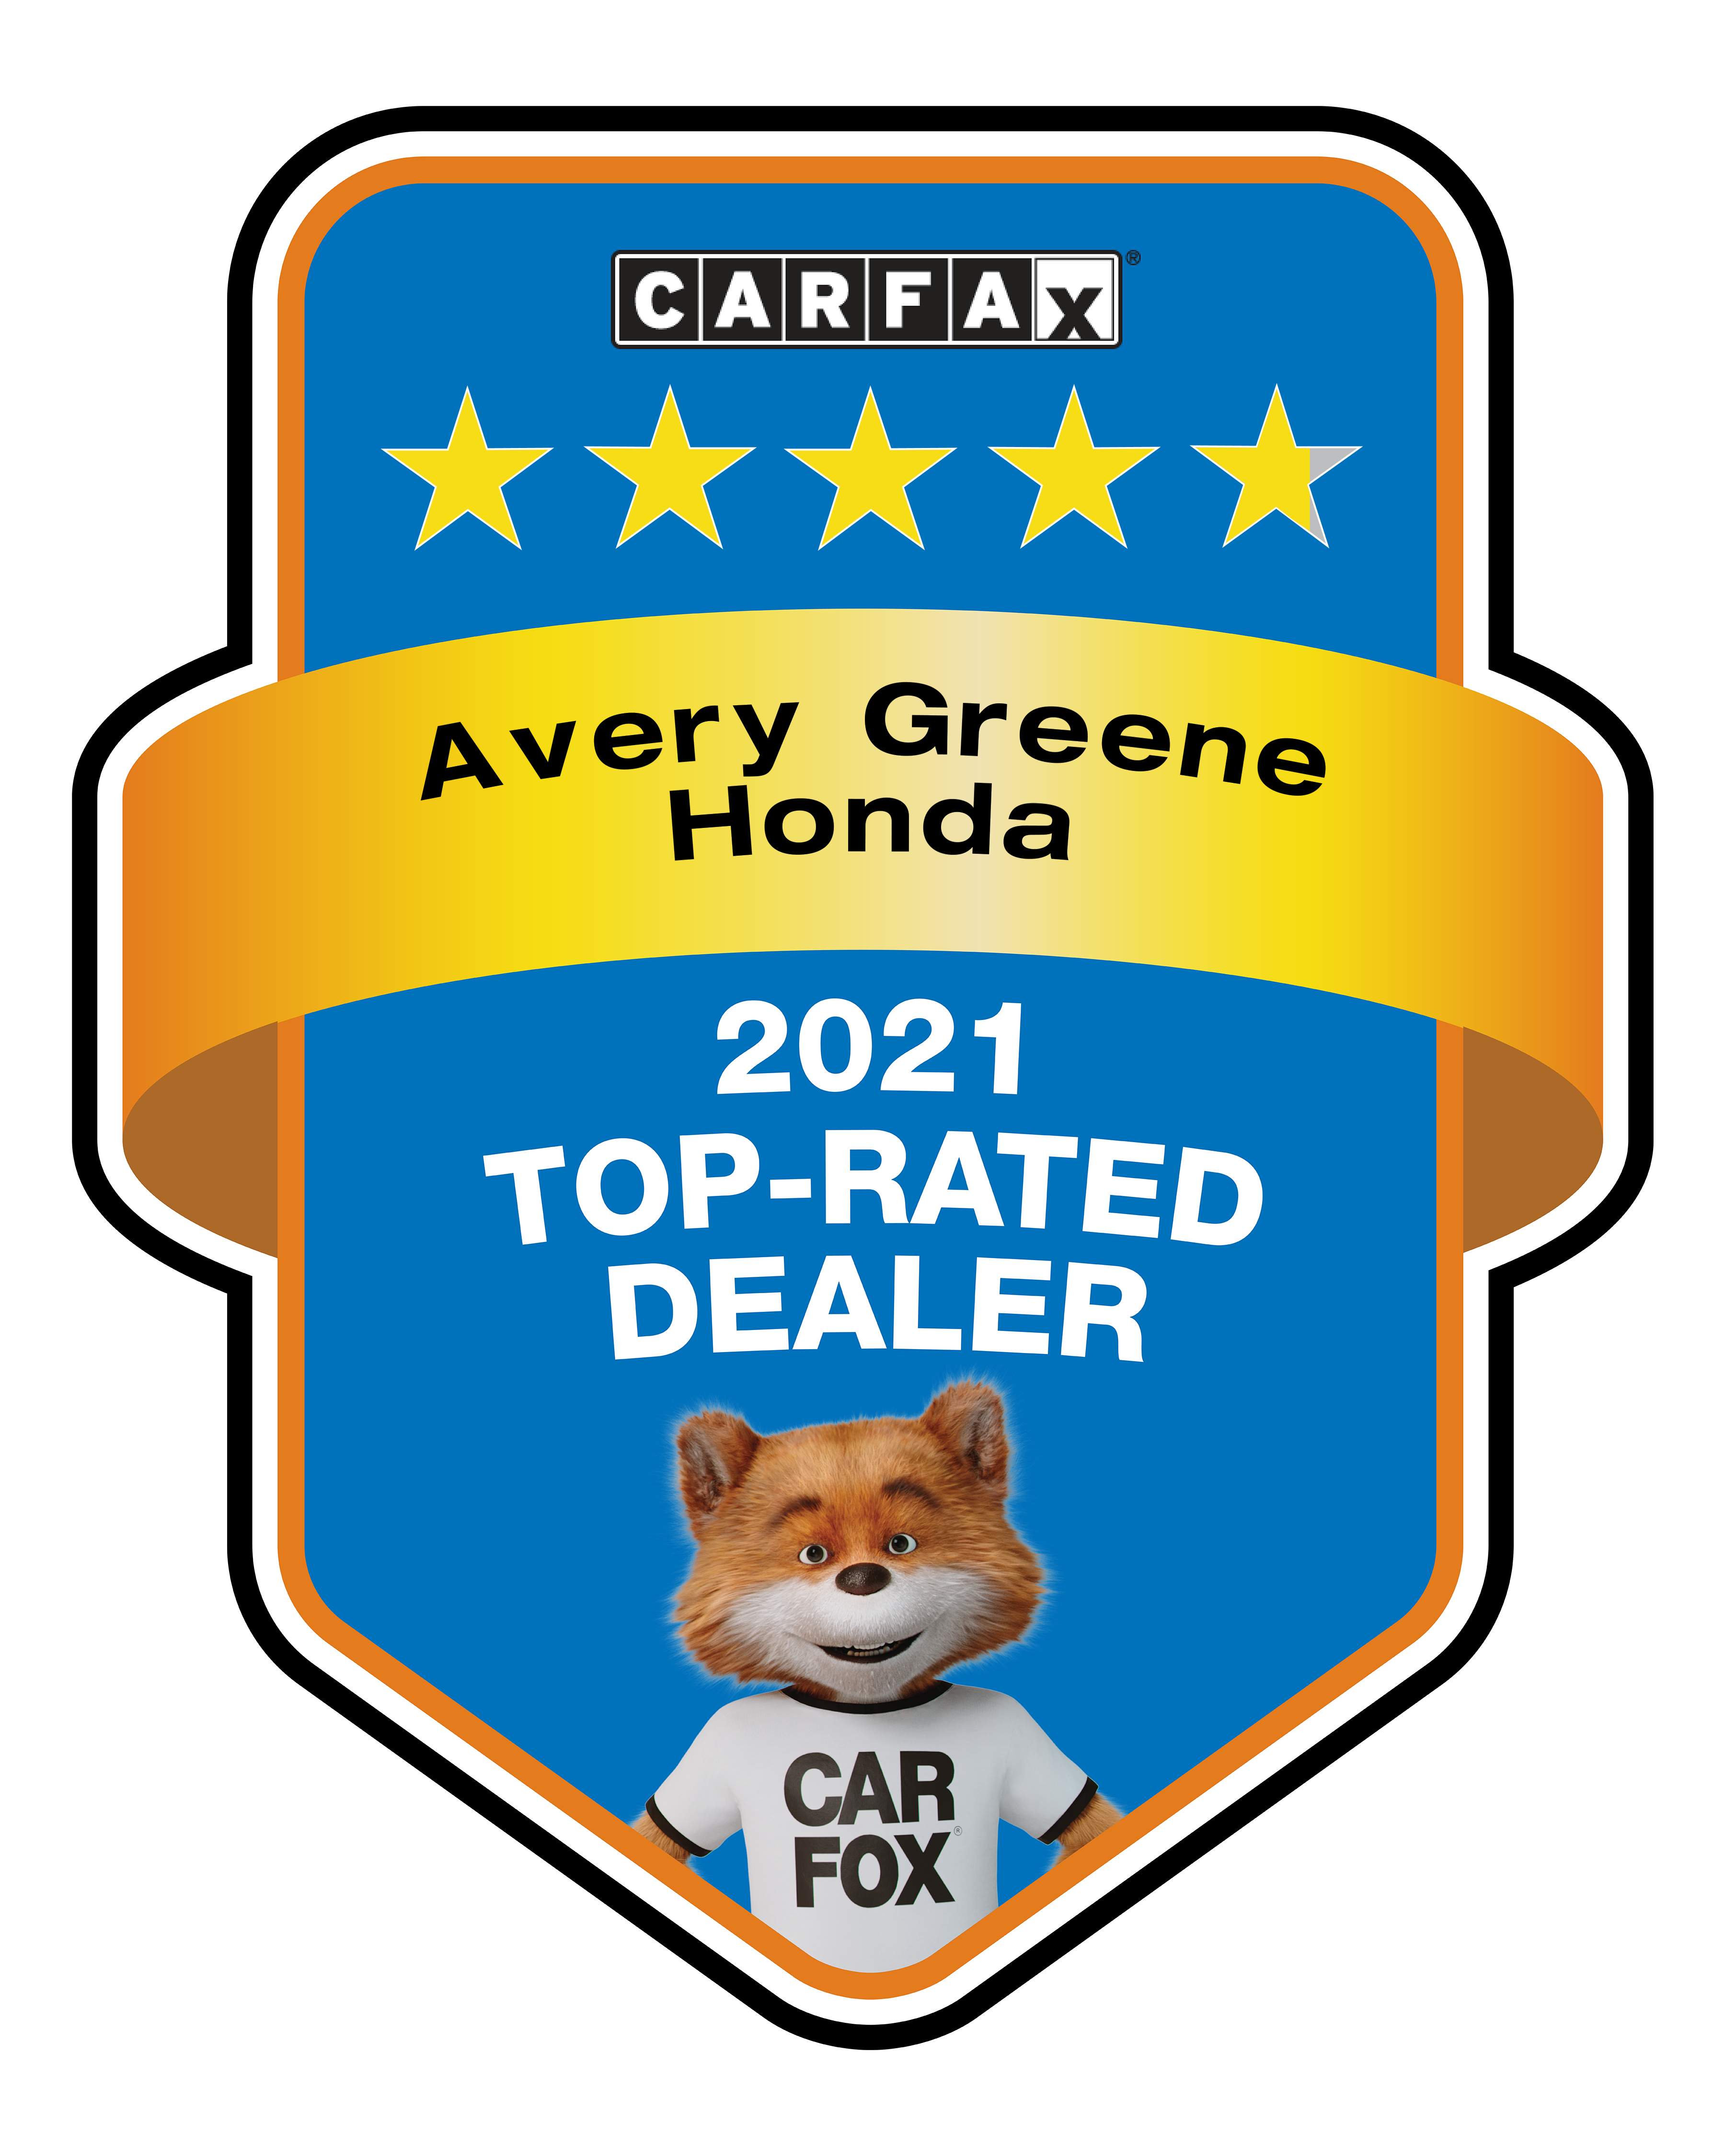 Car Fax top rated badge (005)